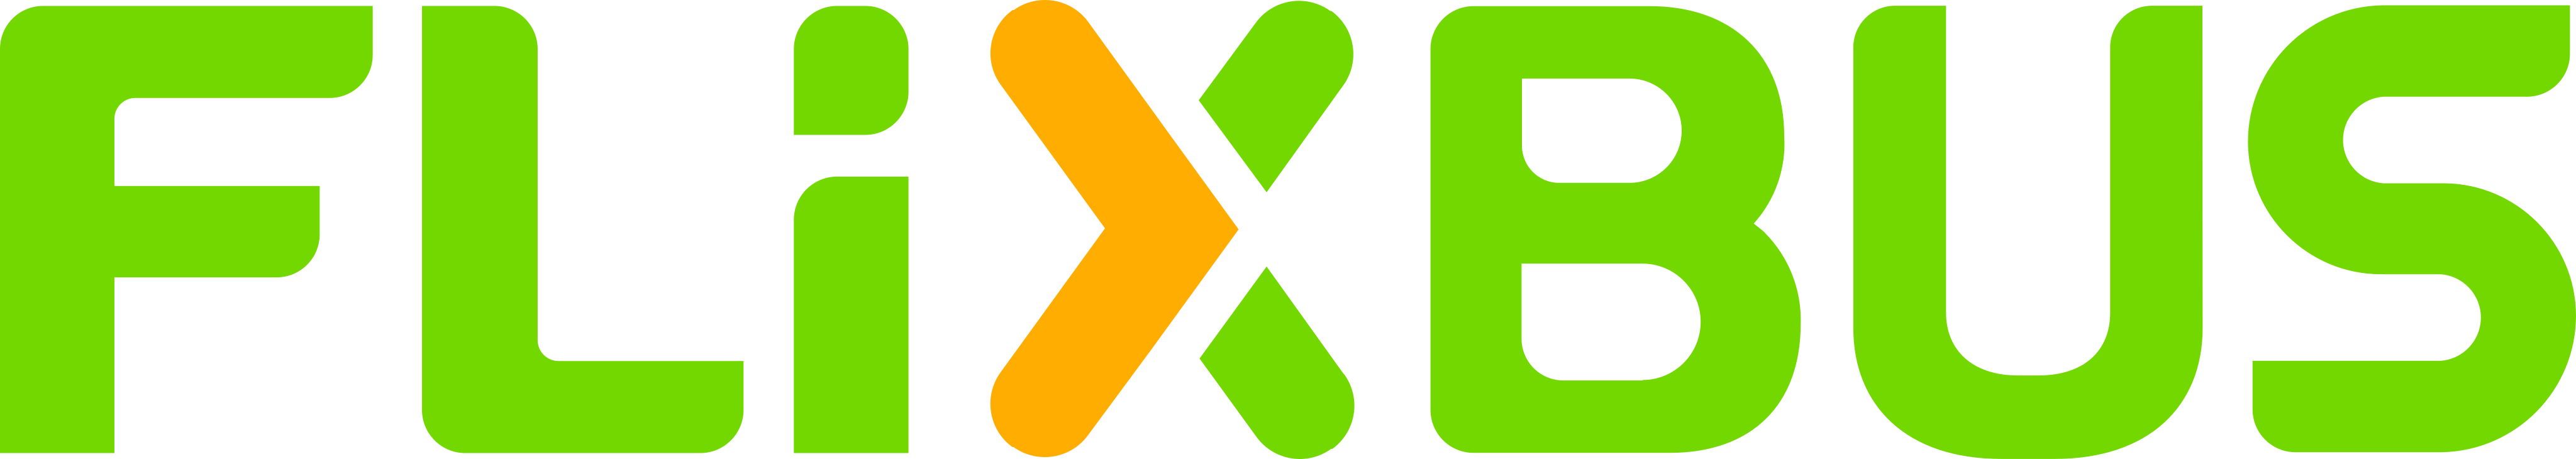 flixbus logo - Flixbus Logo